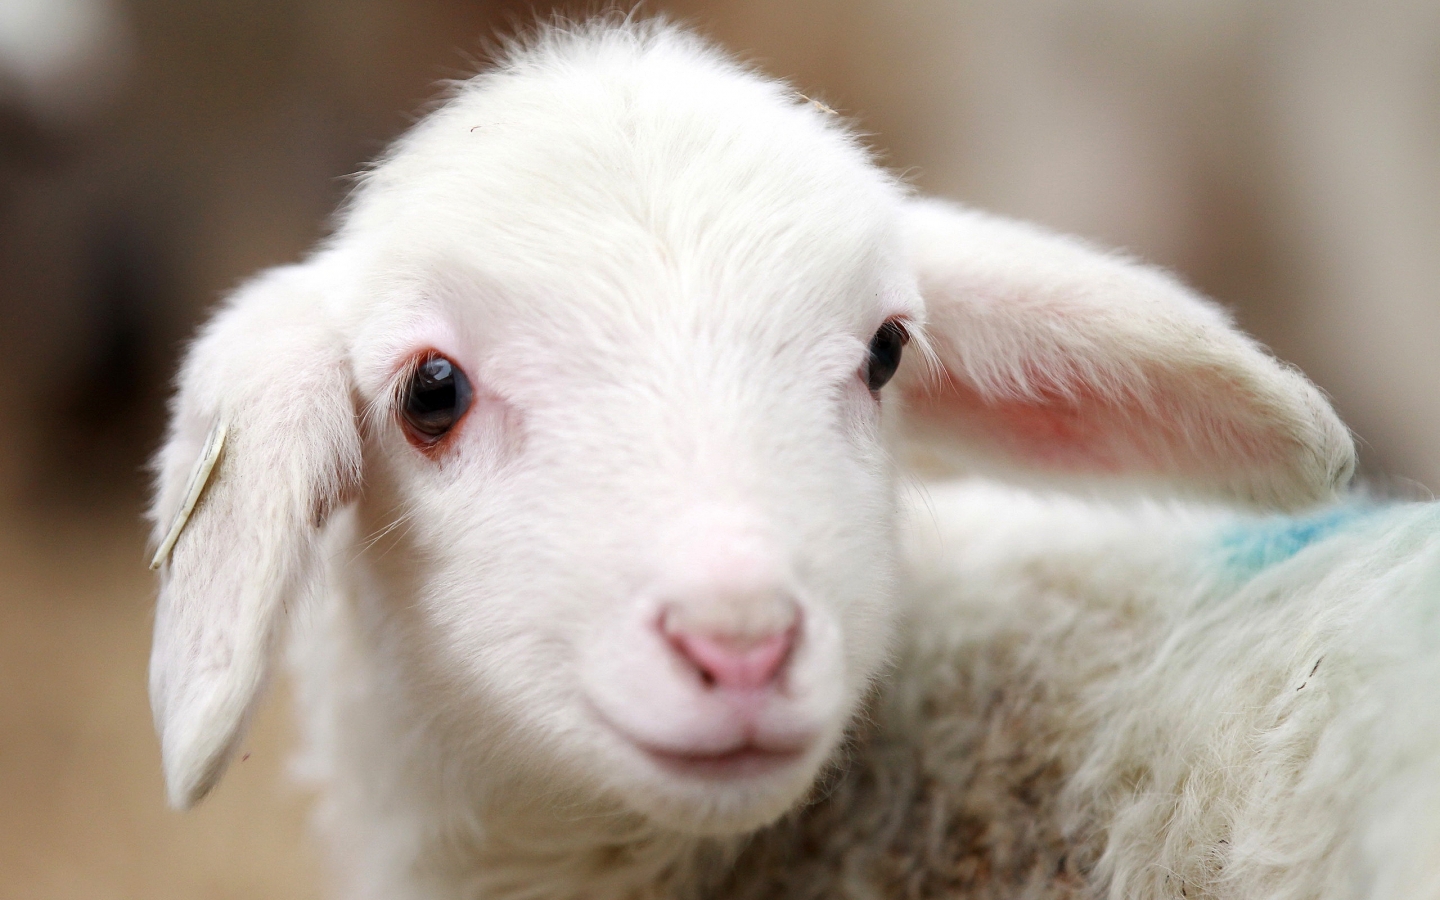 Cute Lamb for 1440 x 900 widescreen resolution